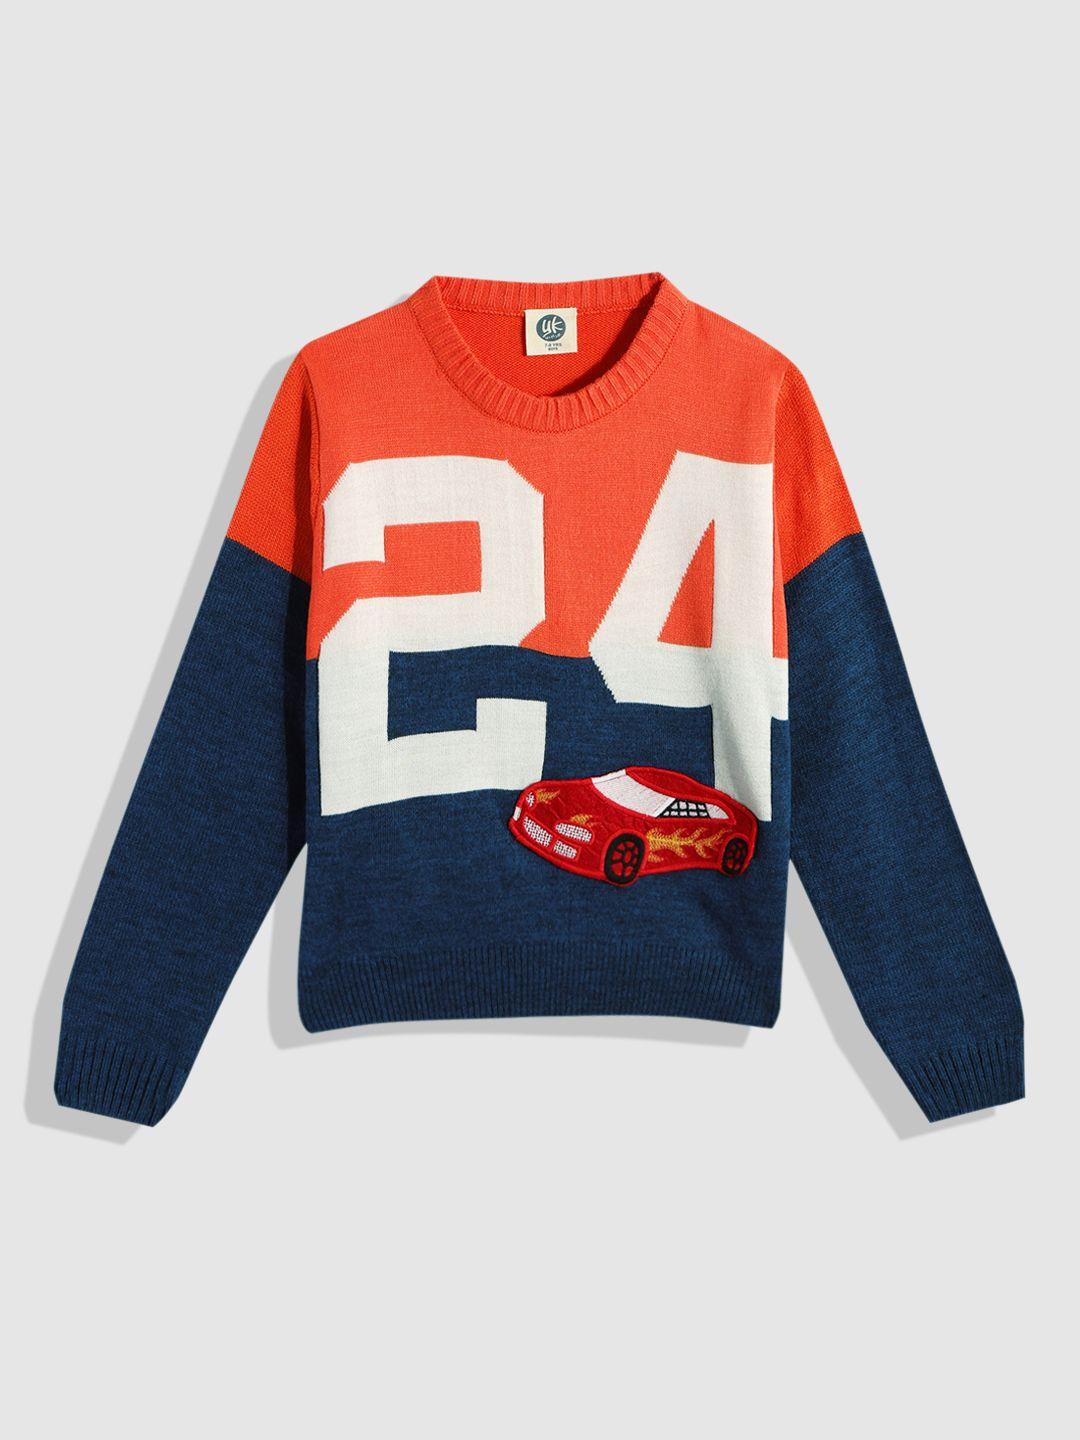 yk boys navy blue & orange colourblocked pullover with applique detail